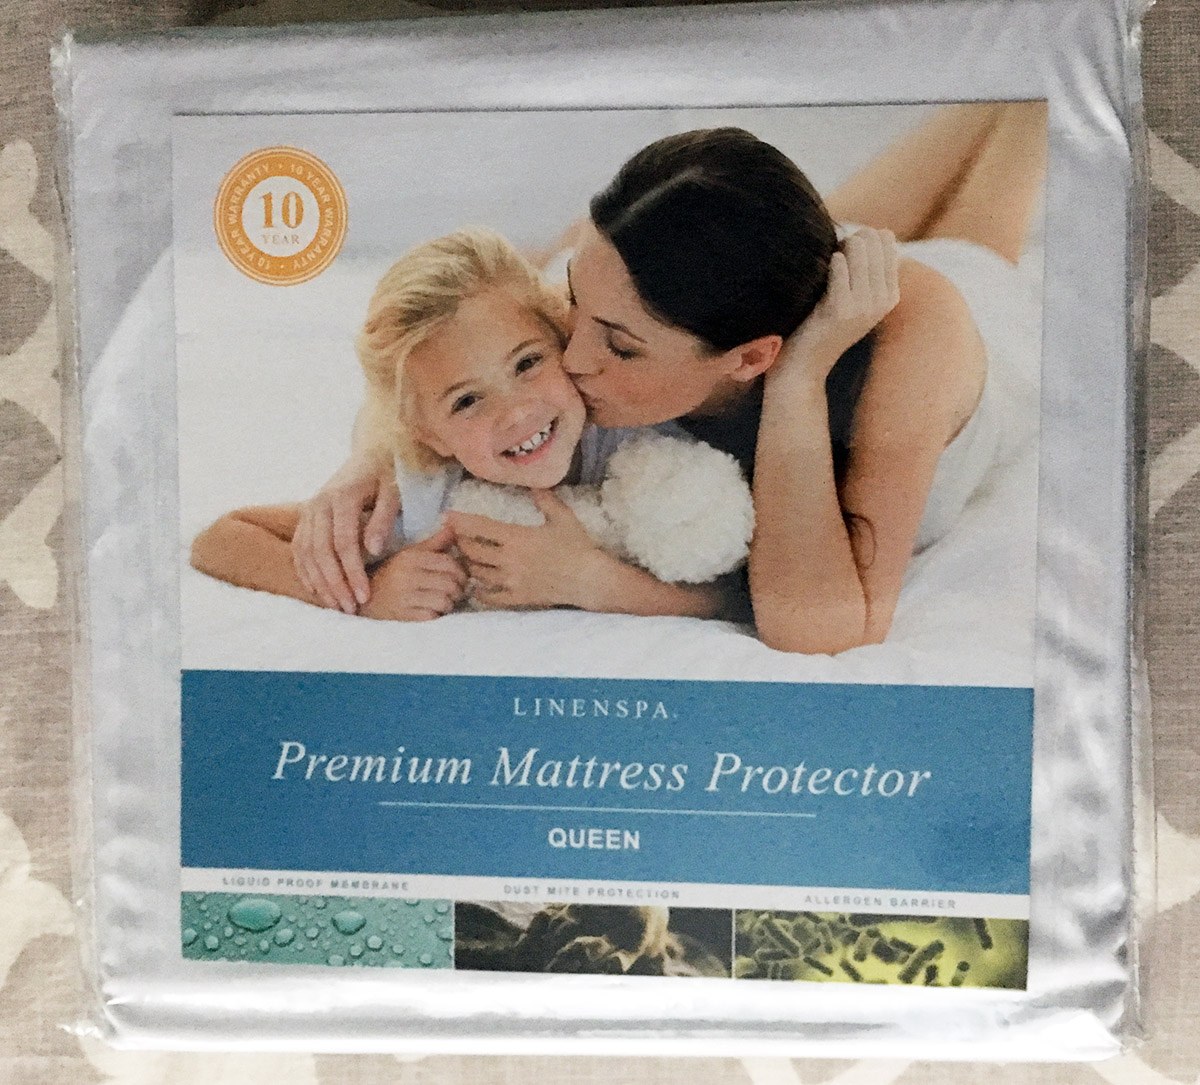 TopTight Premium Mattress Protector by Linenspa Essentials - White